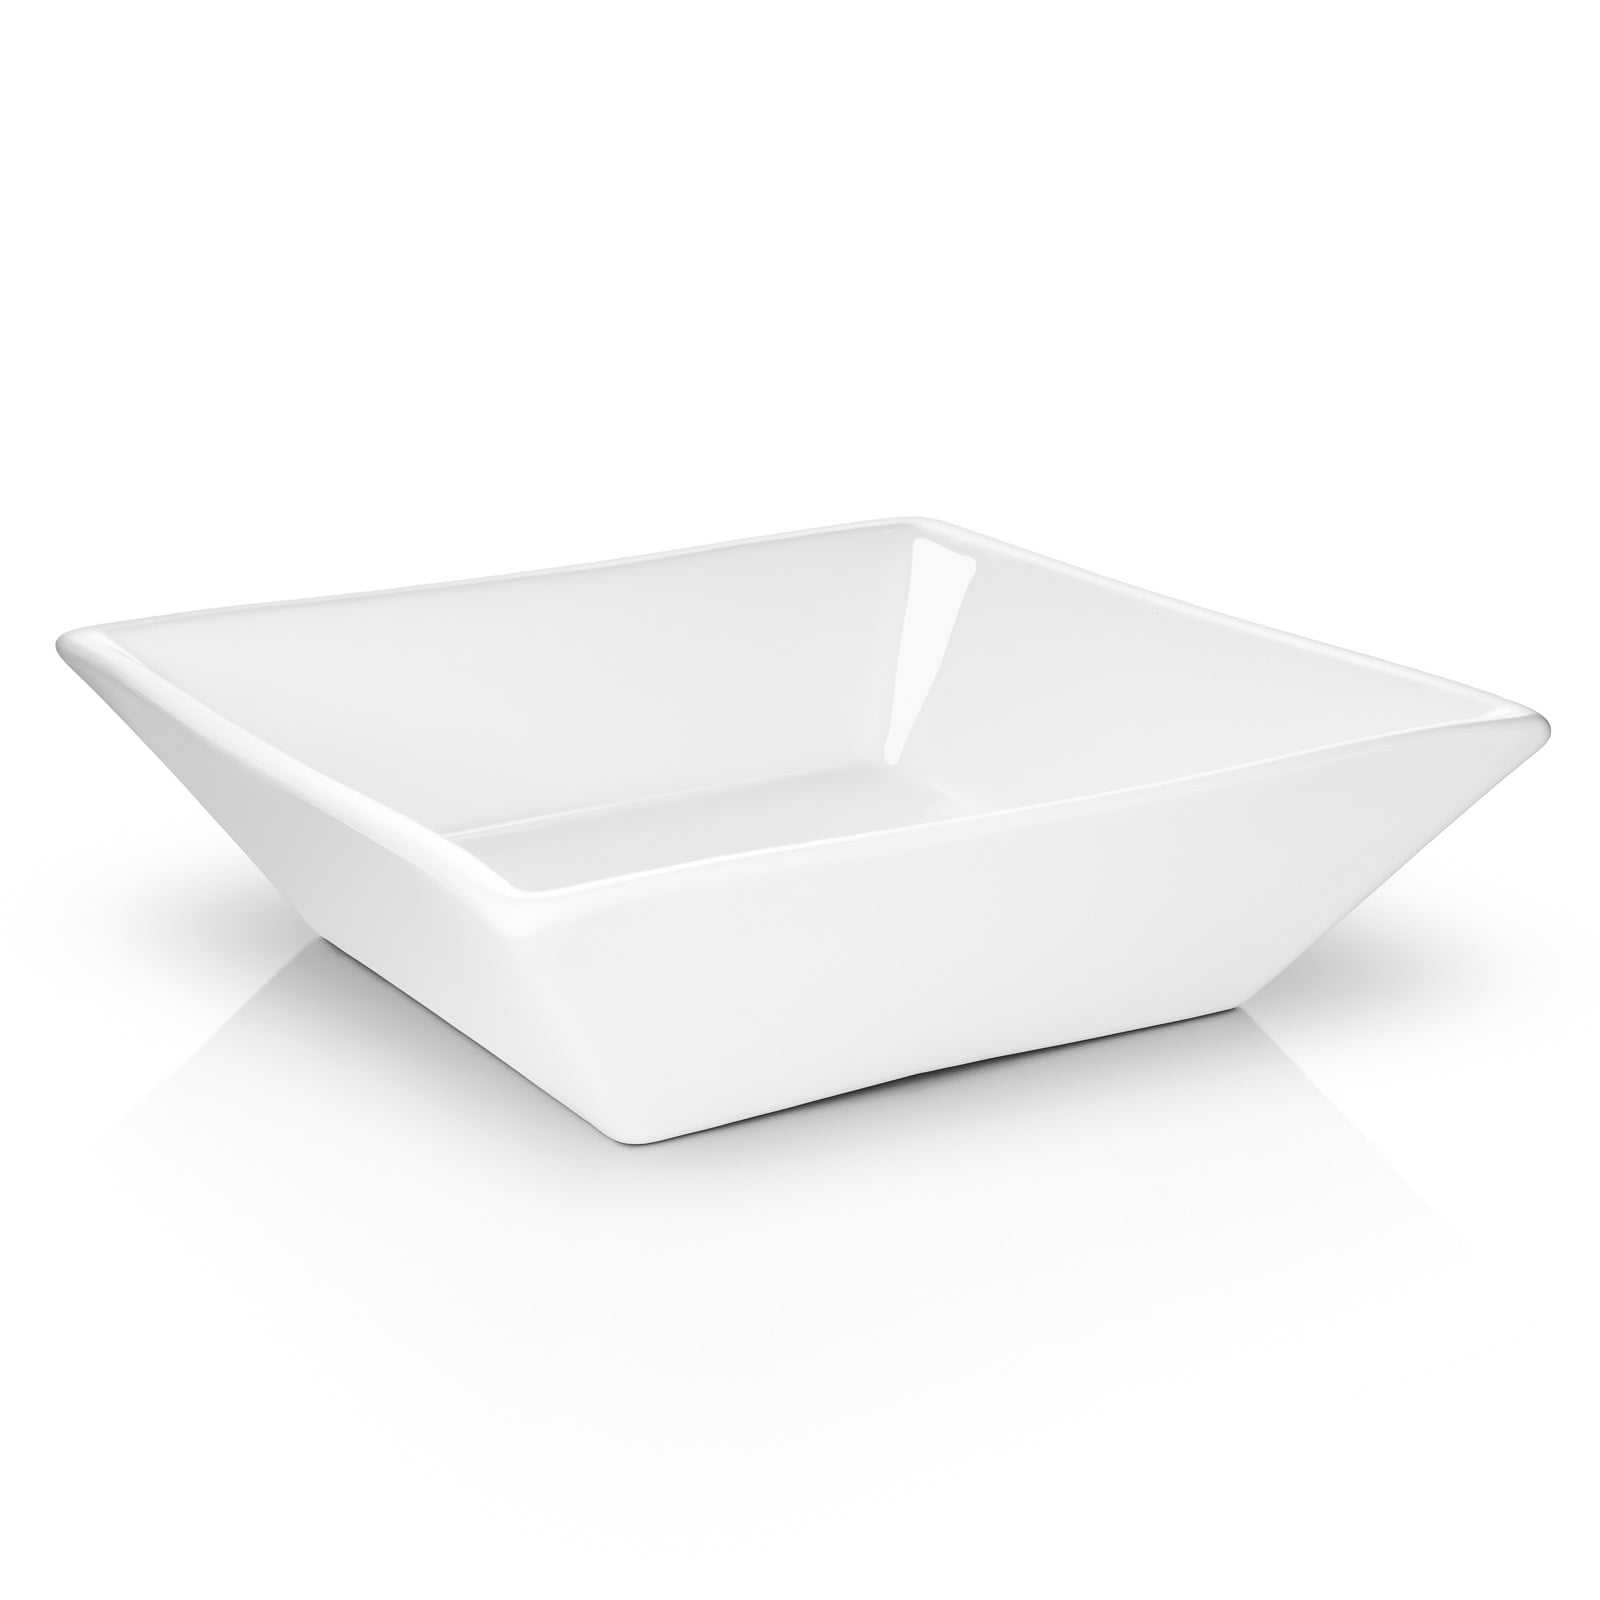 Beveled Square White Bathroom Vanity Bowl Modern Ceramic Vessel Sink 